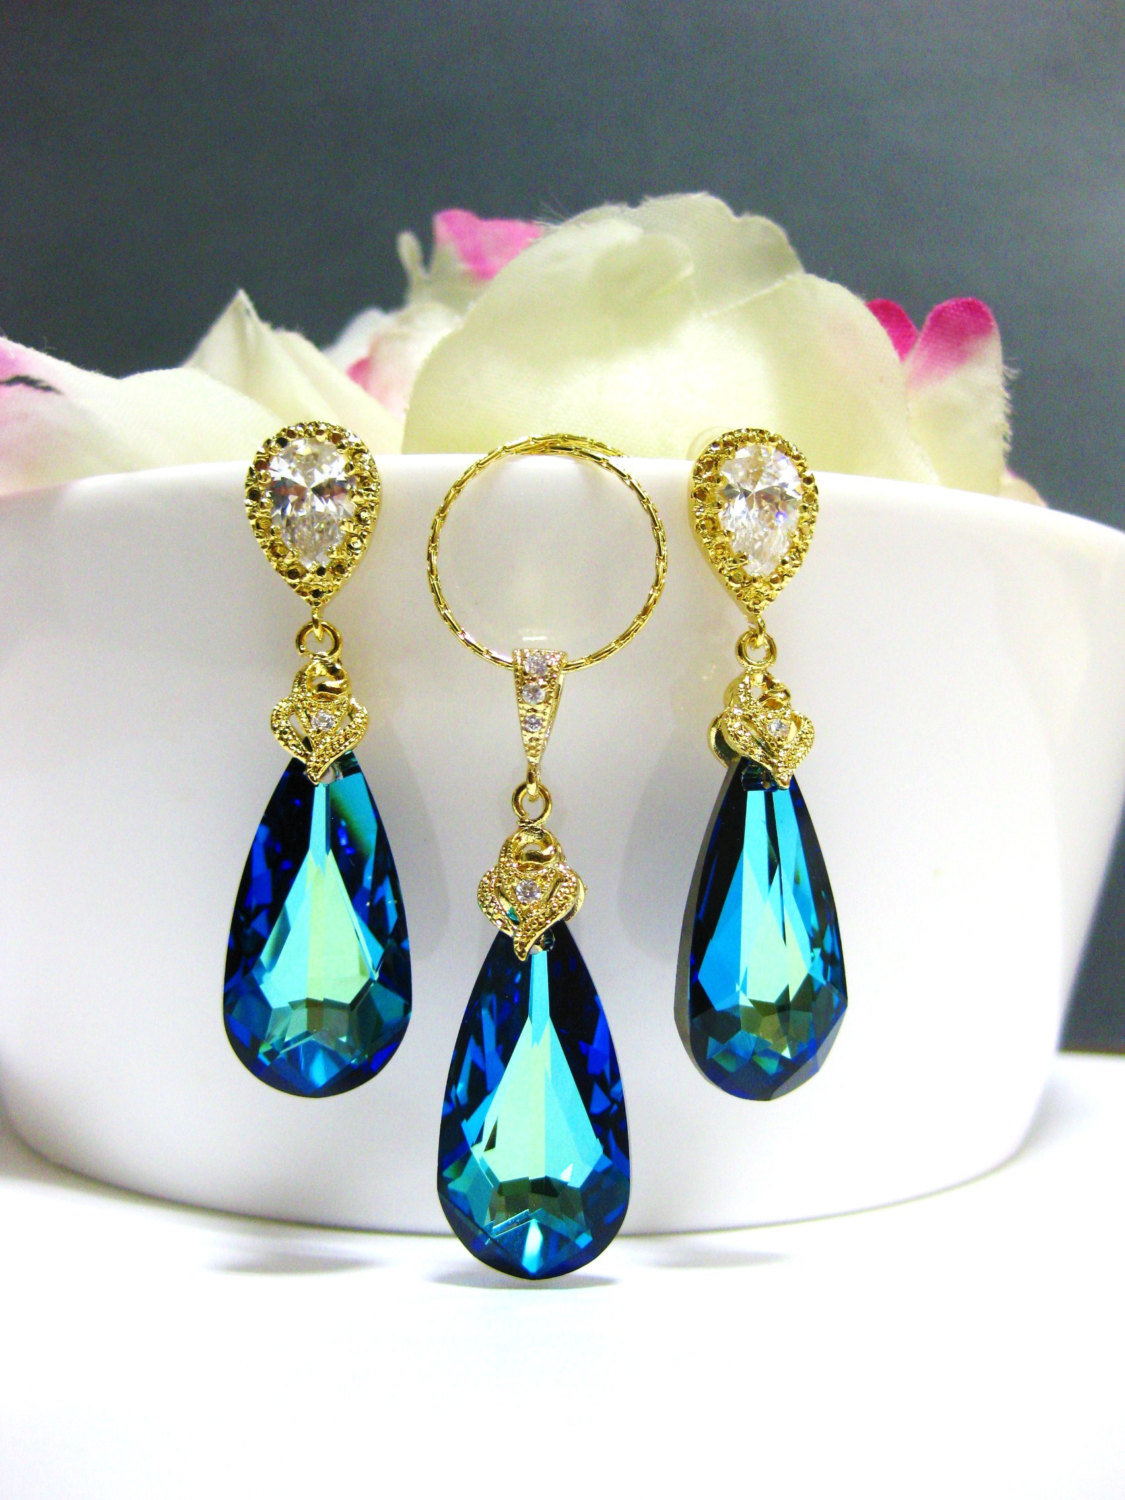 Bermuda Blue Earrings & Necklace Gift Set Swarovski Crystal Teardrop Gold Jewelry Bridesmaid Gift Bridal Drop Earrings (ne003)